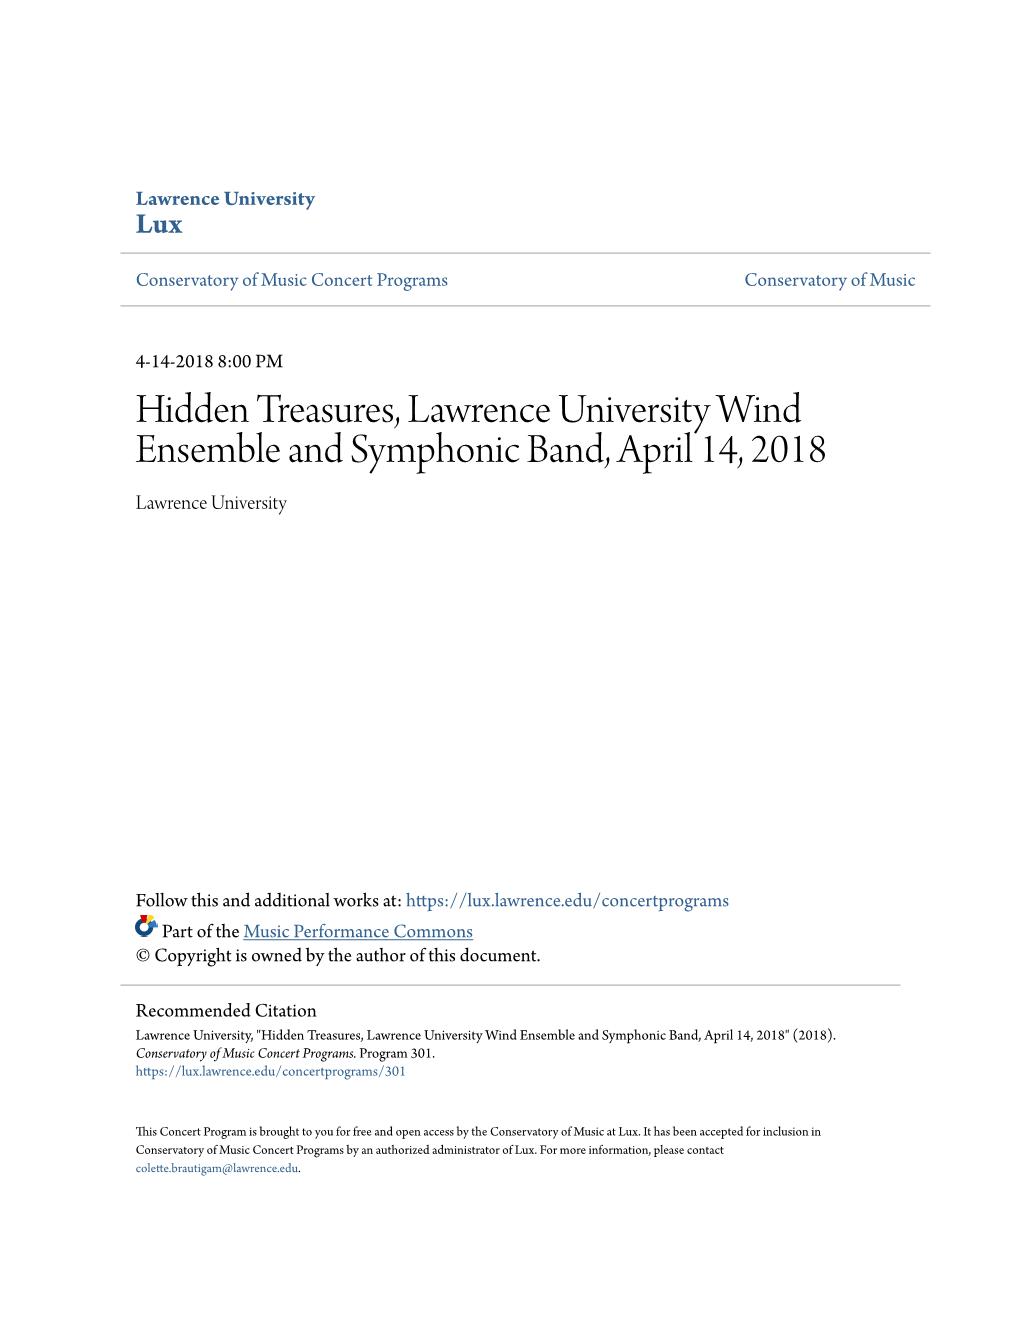 Hidden Treasures, Lawrence University Wind Ensemble and Symphonic Band, April 14, 2018 Lawrence University